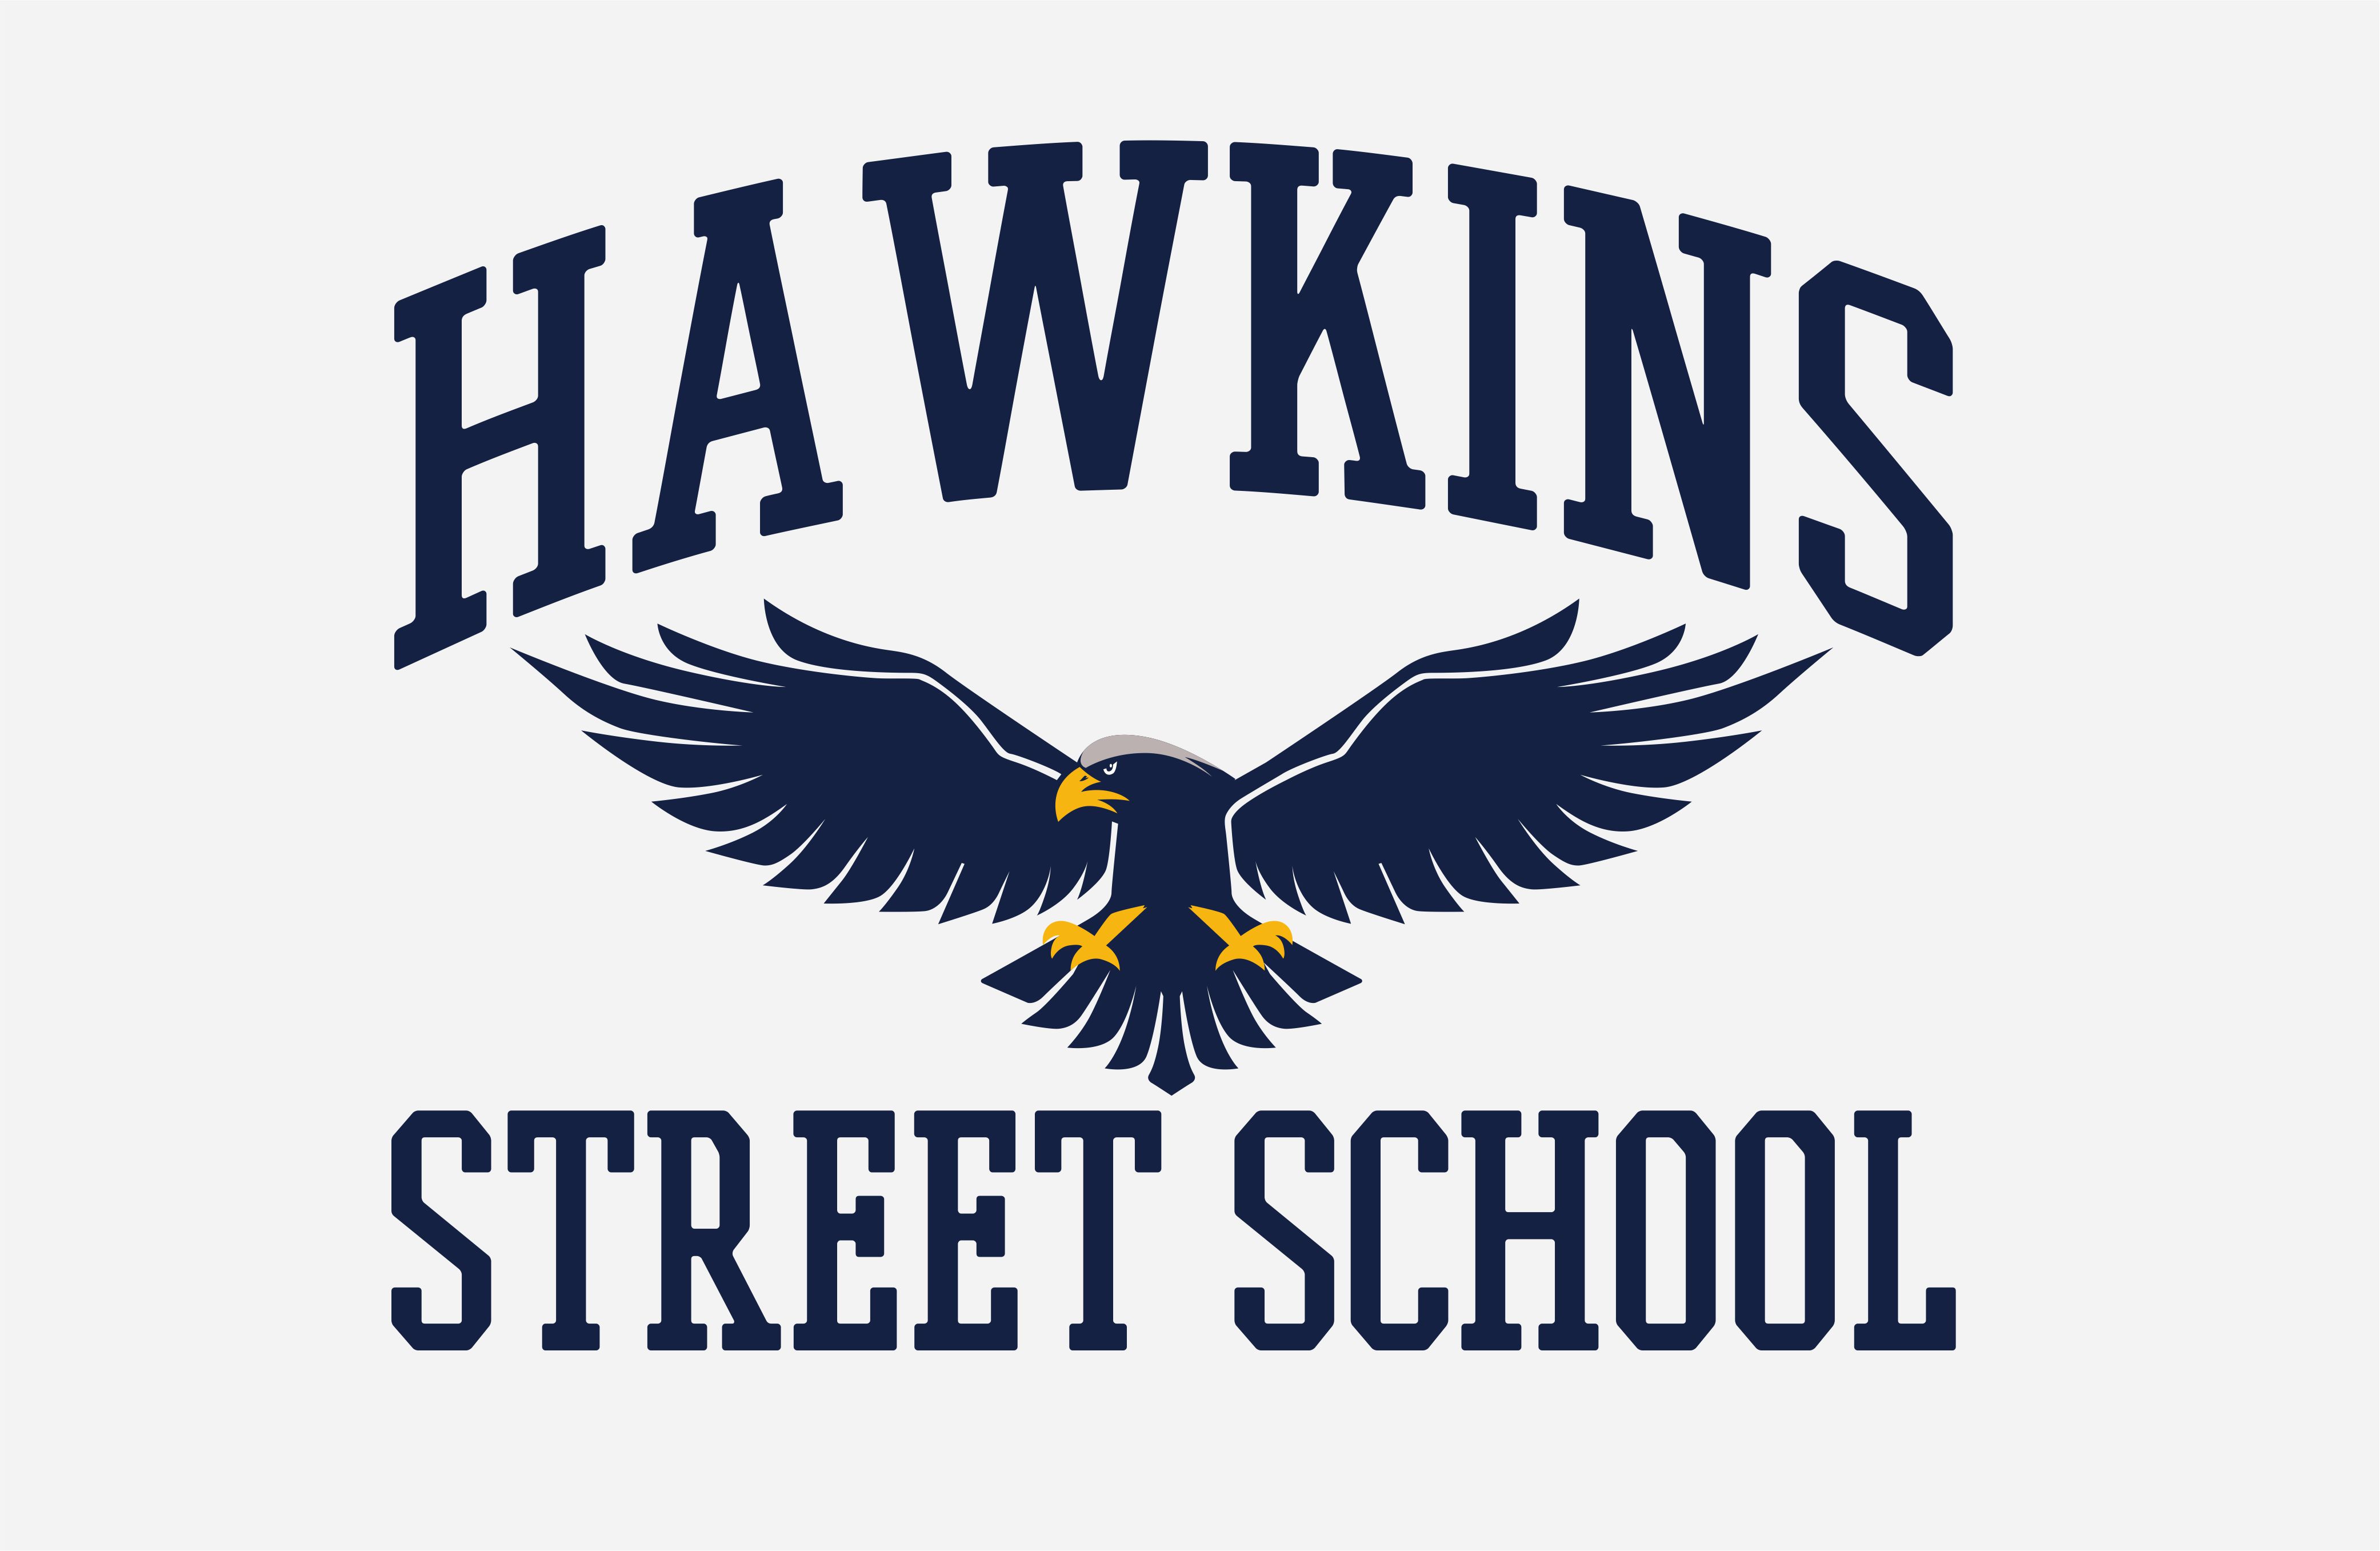 Hawkins Street School